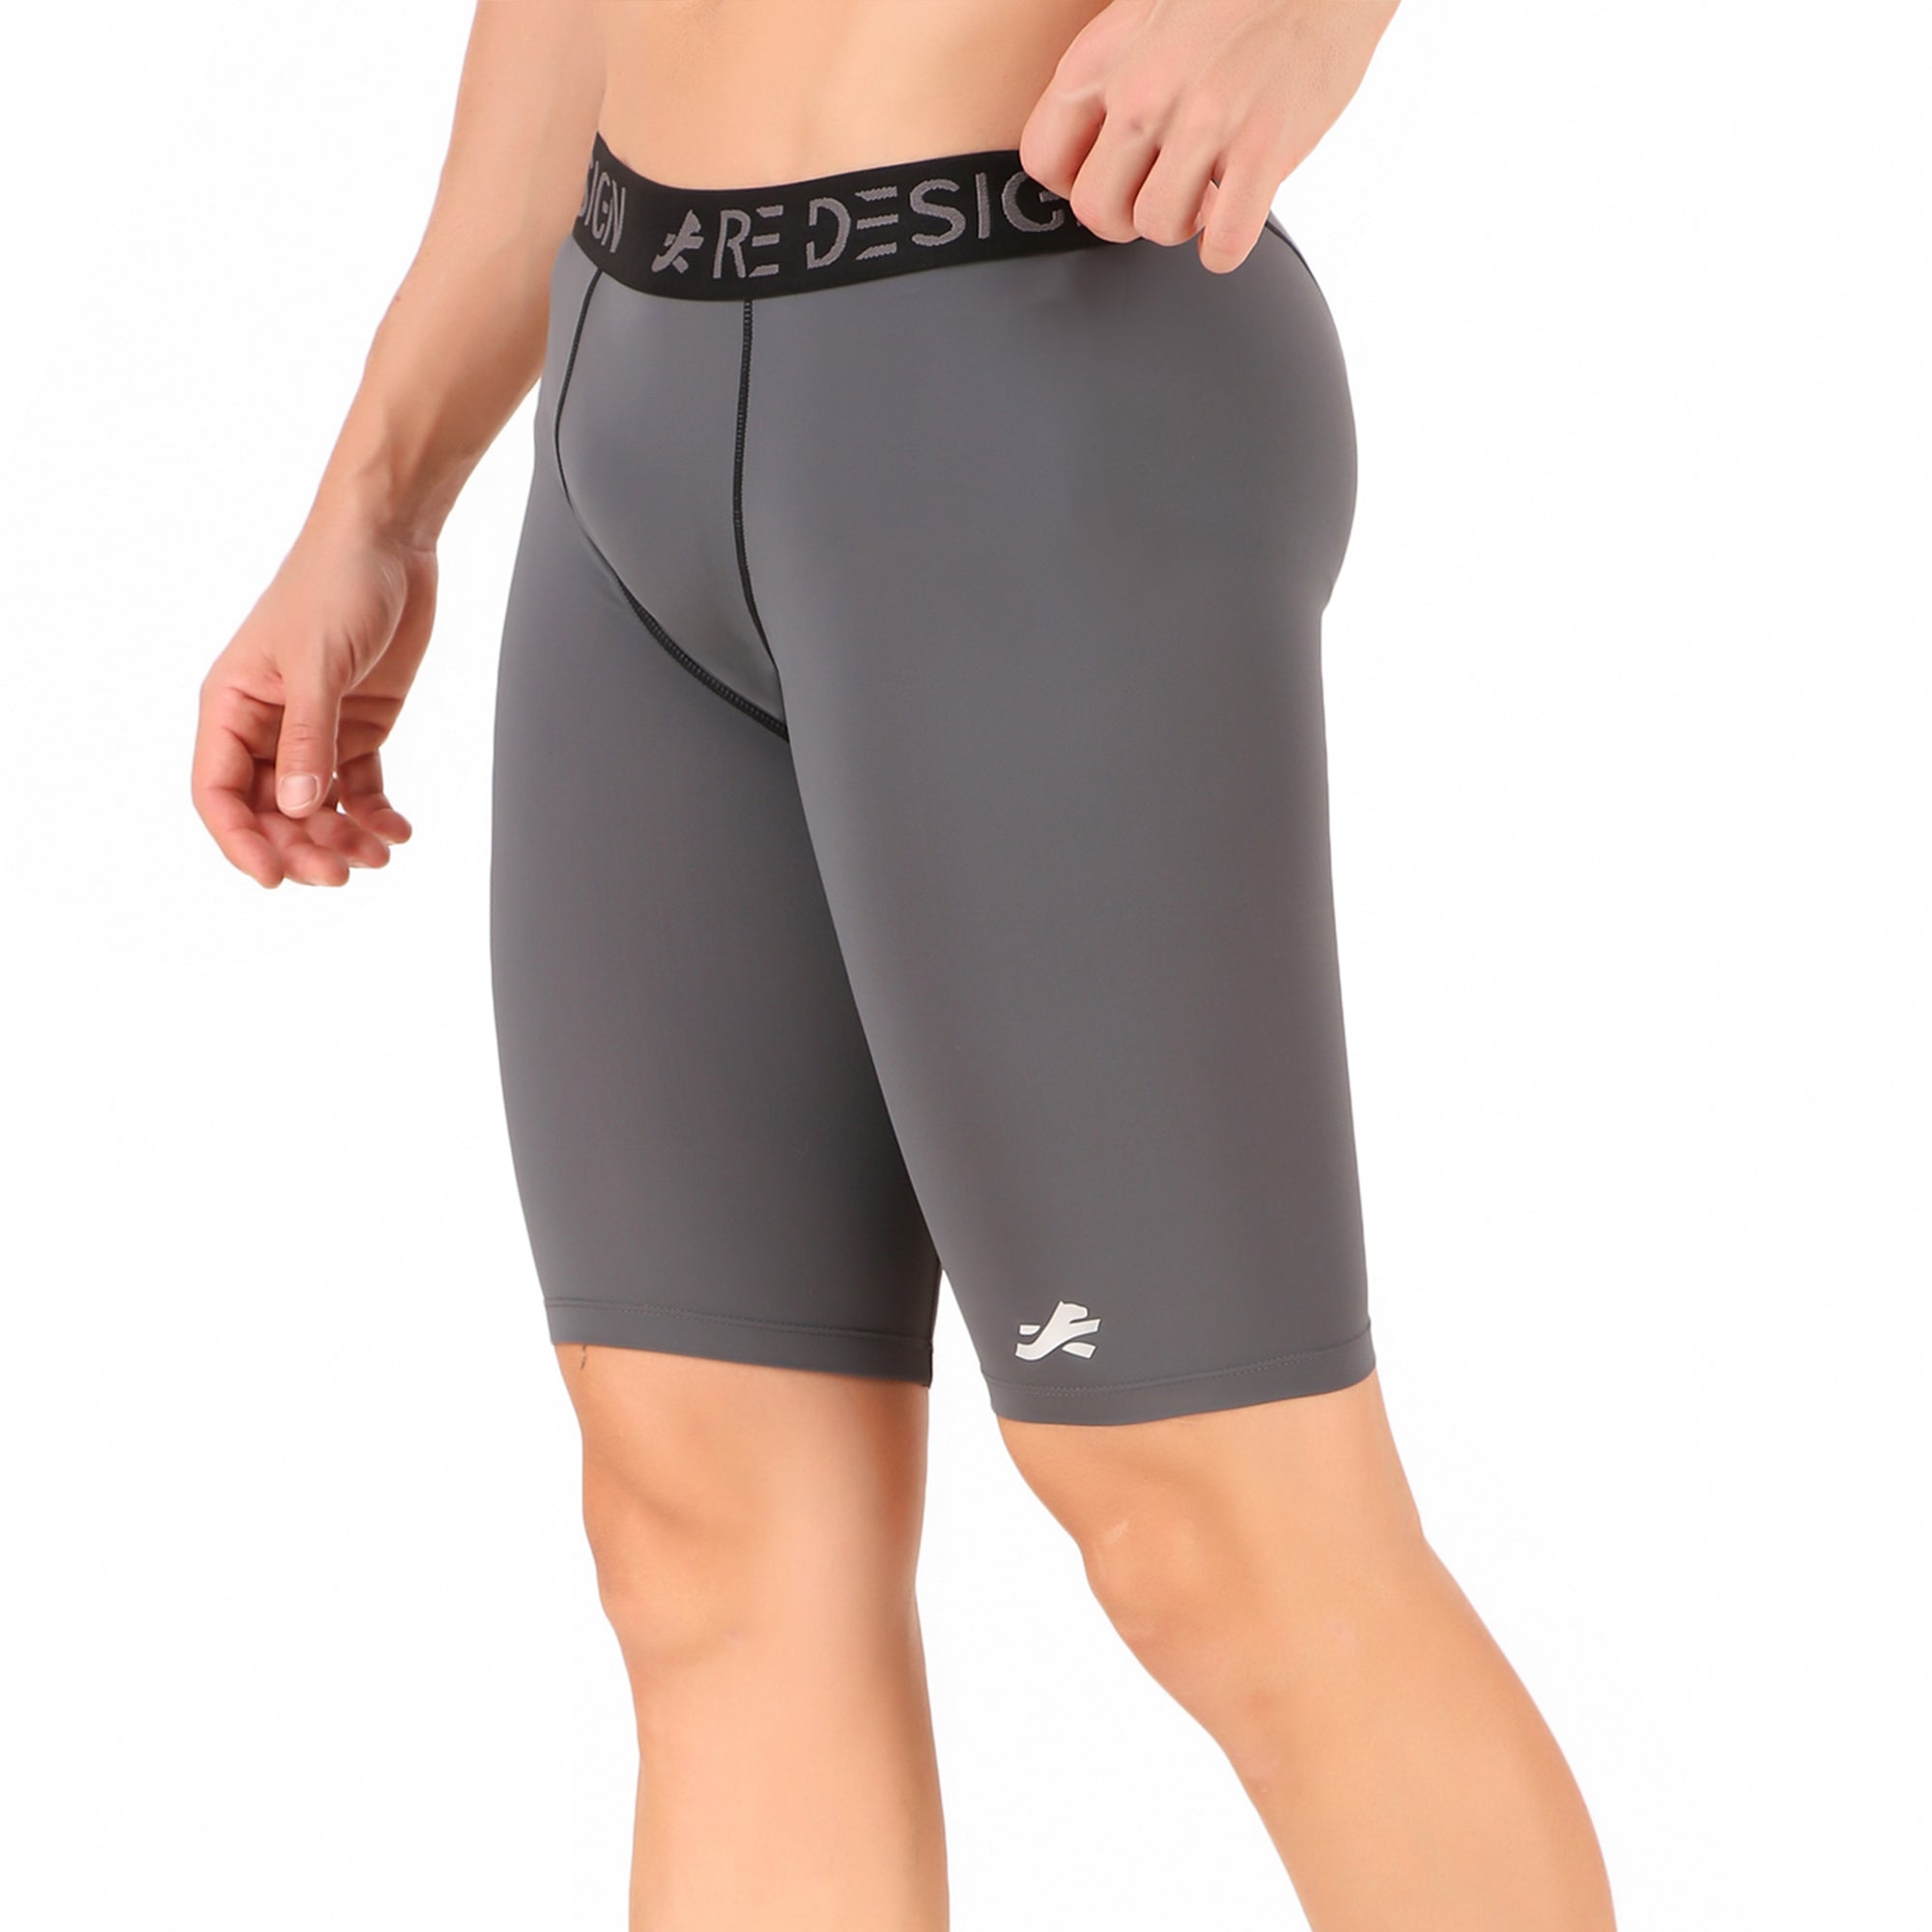 Nylon Compression Shorts and Half Tights For Men (Dark Grey)